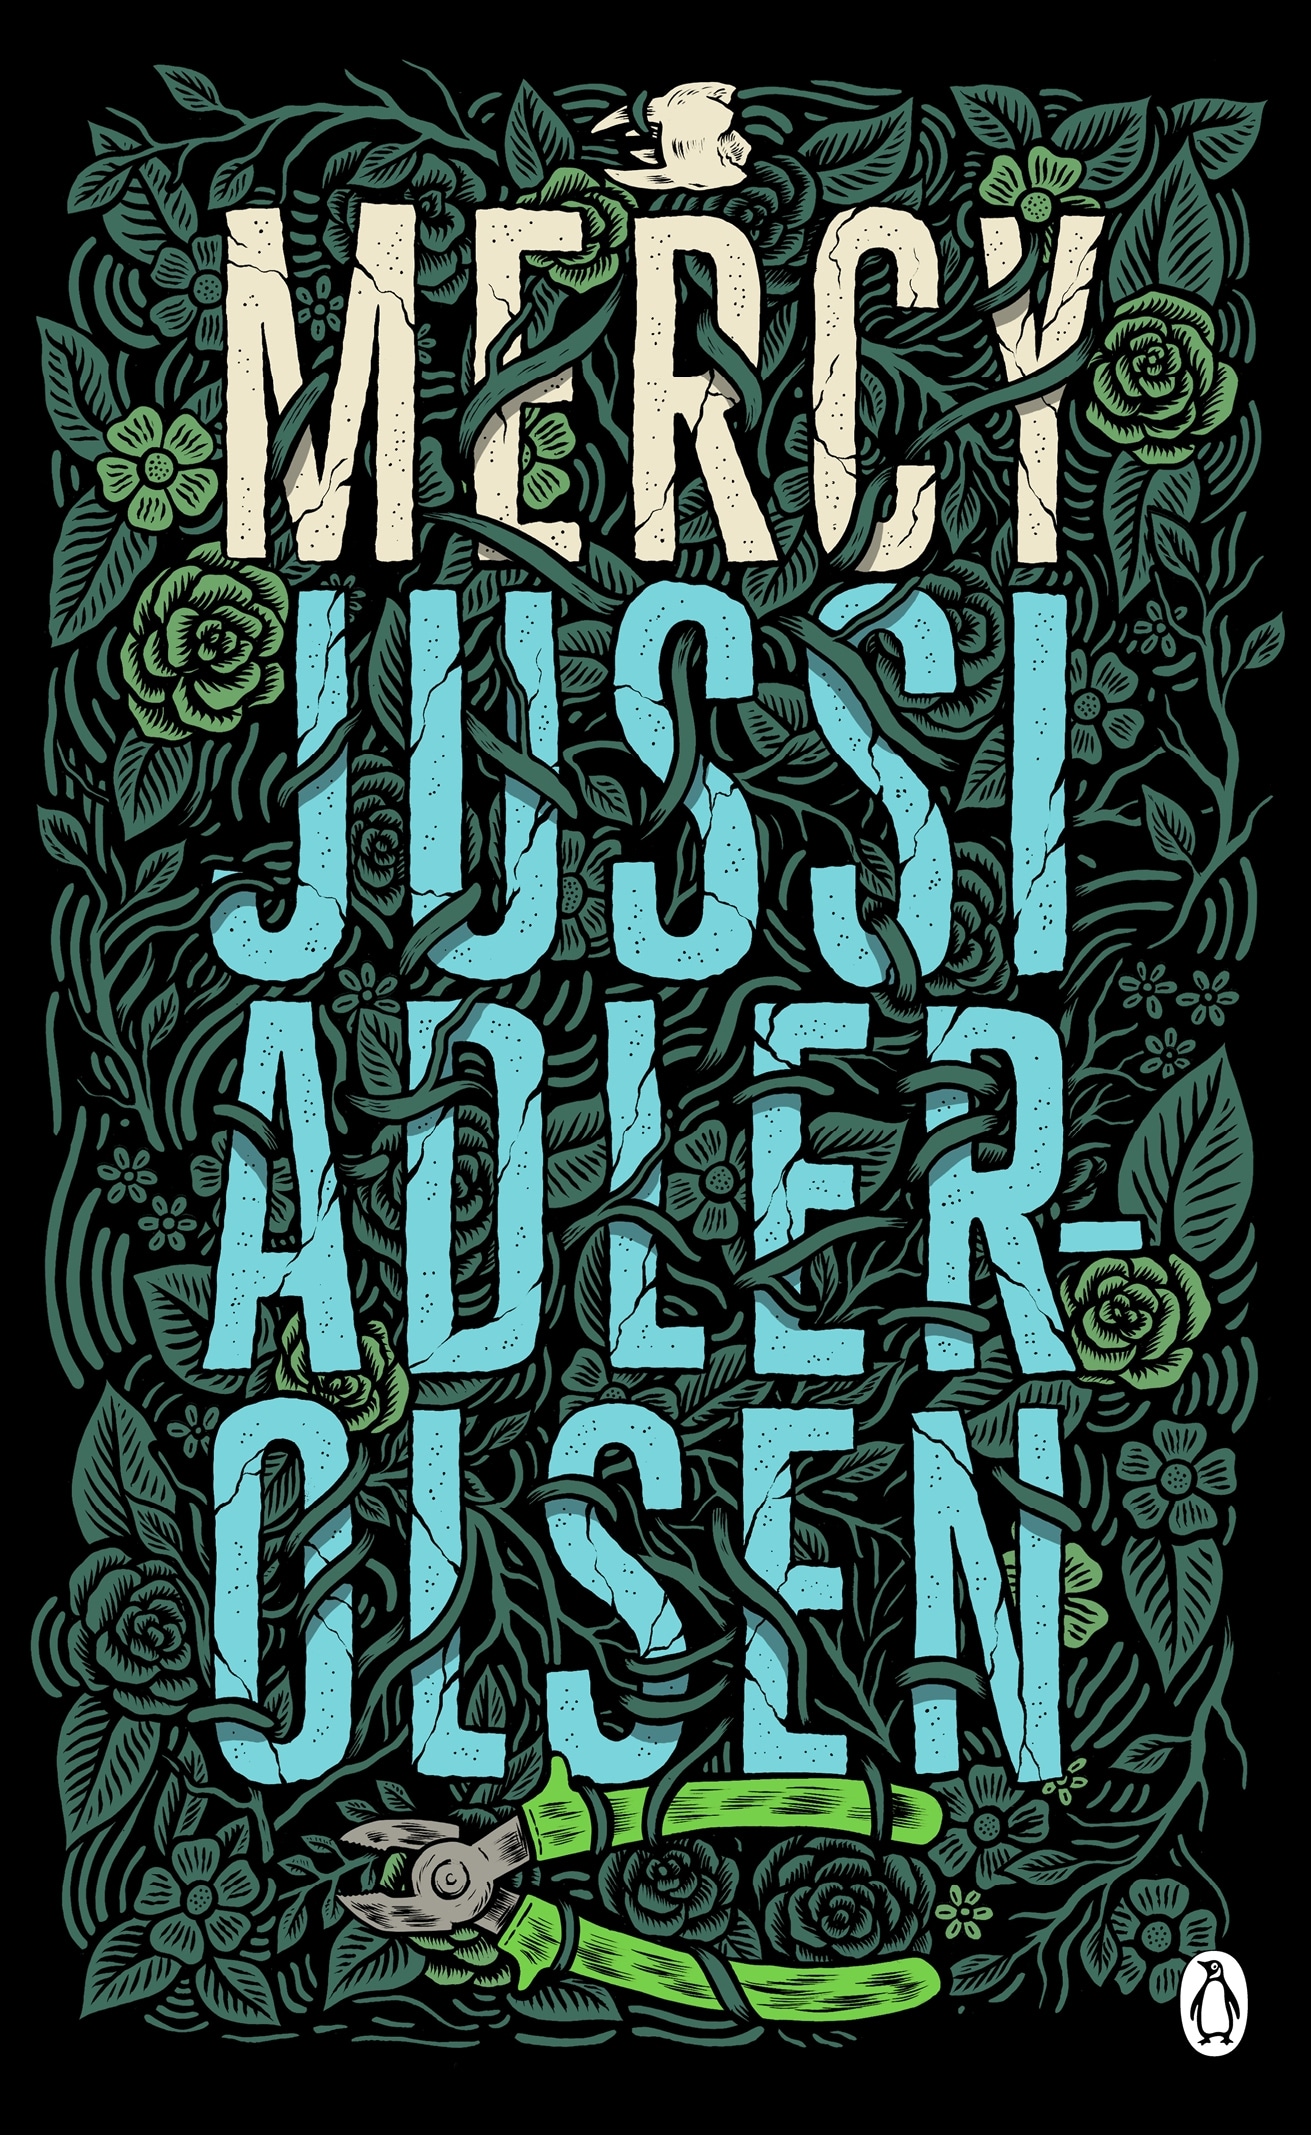 Book “Mercy” by Jussi Adler-Olsen — March 8, 2018